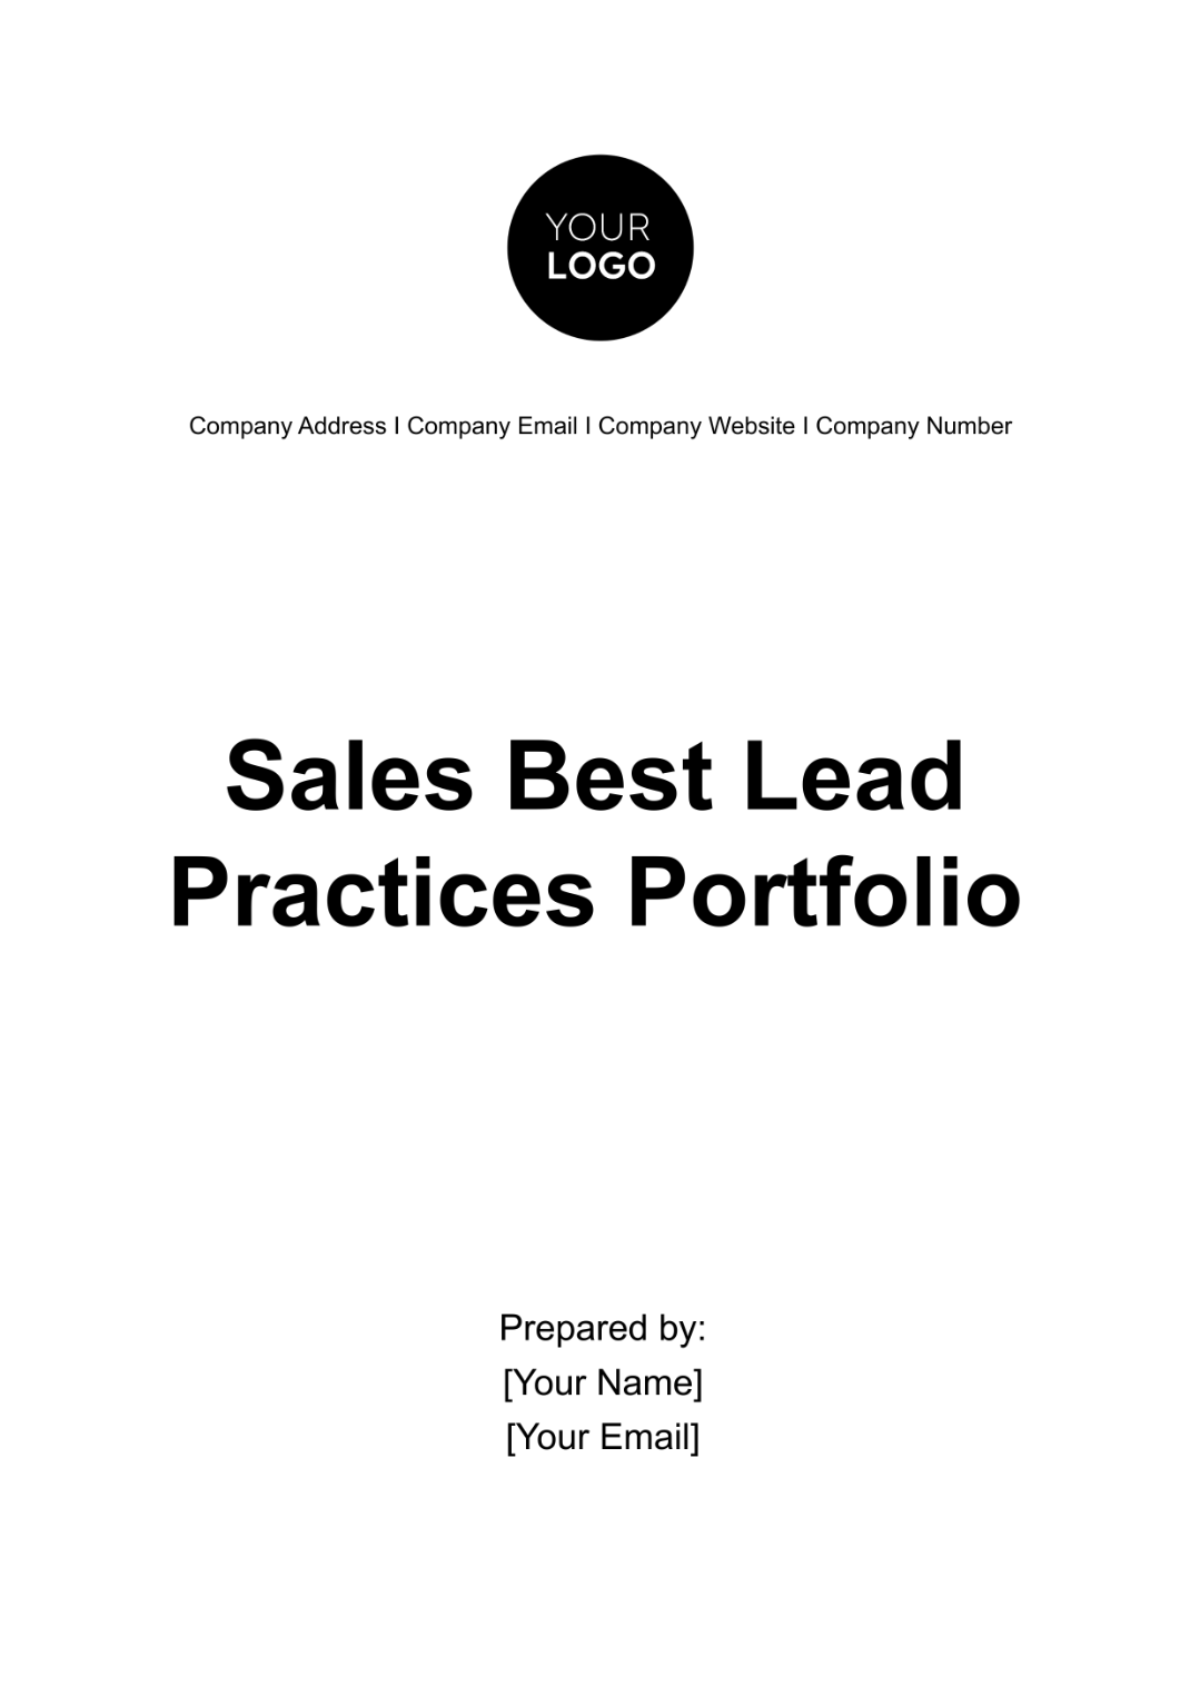 Sales Best Lead Practices Portfolio Template